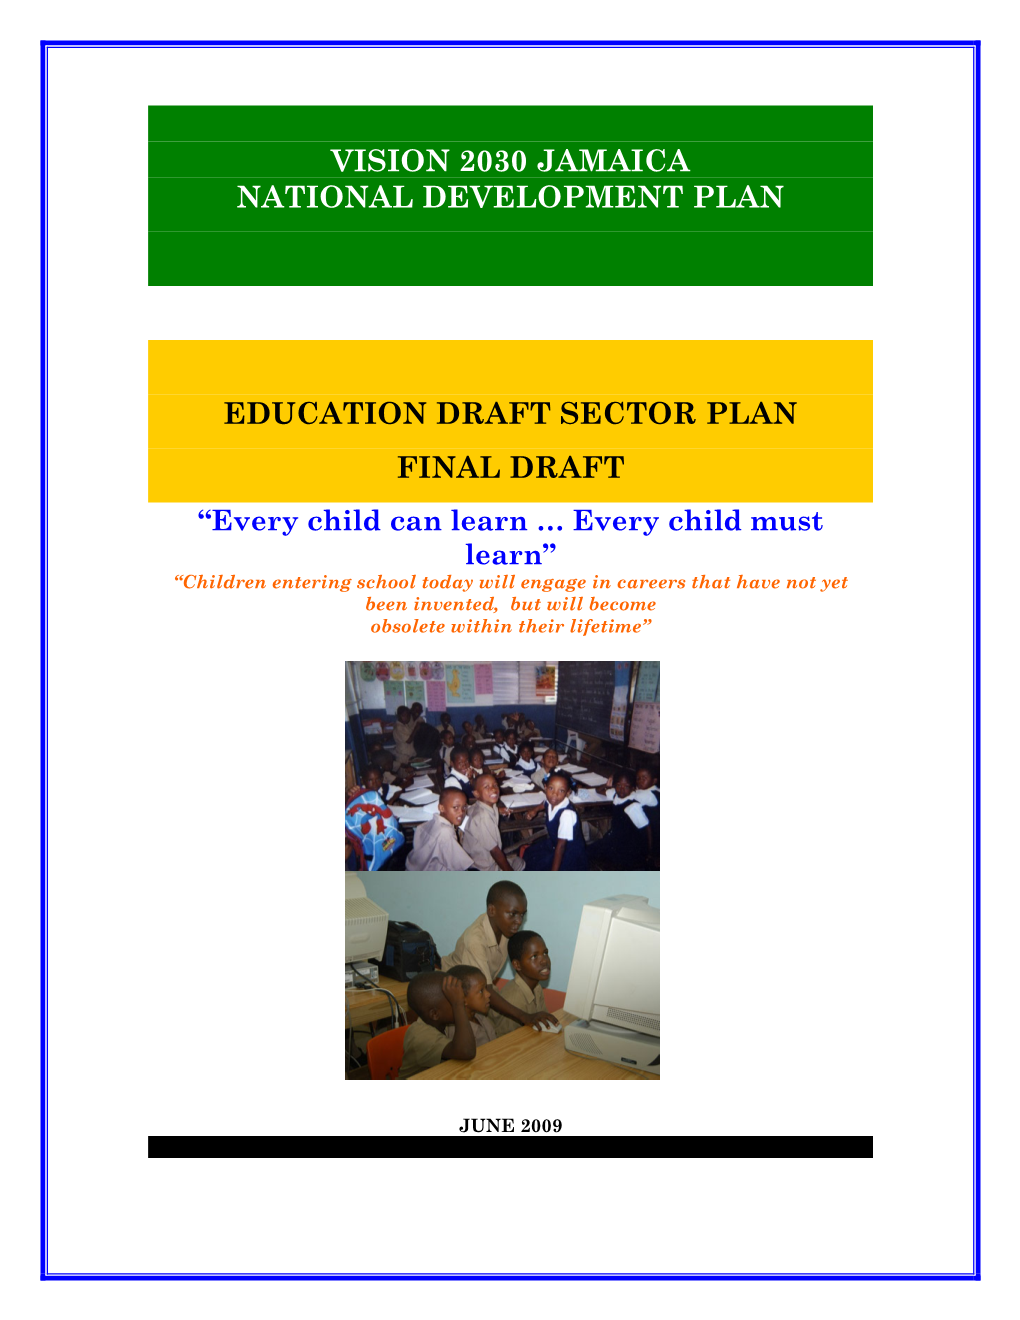 Education Sector Plan